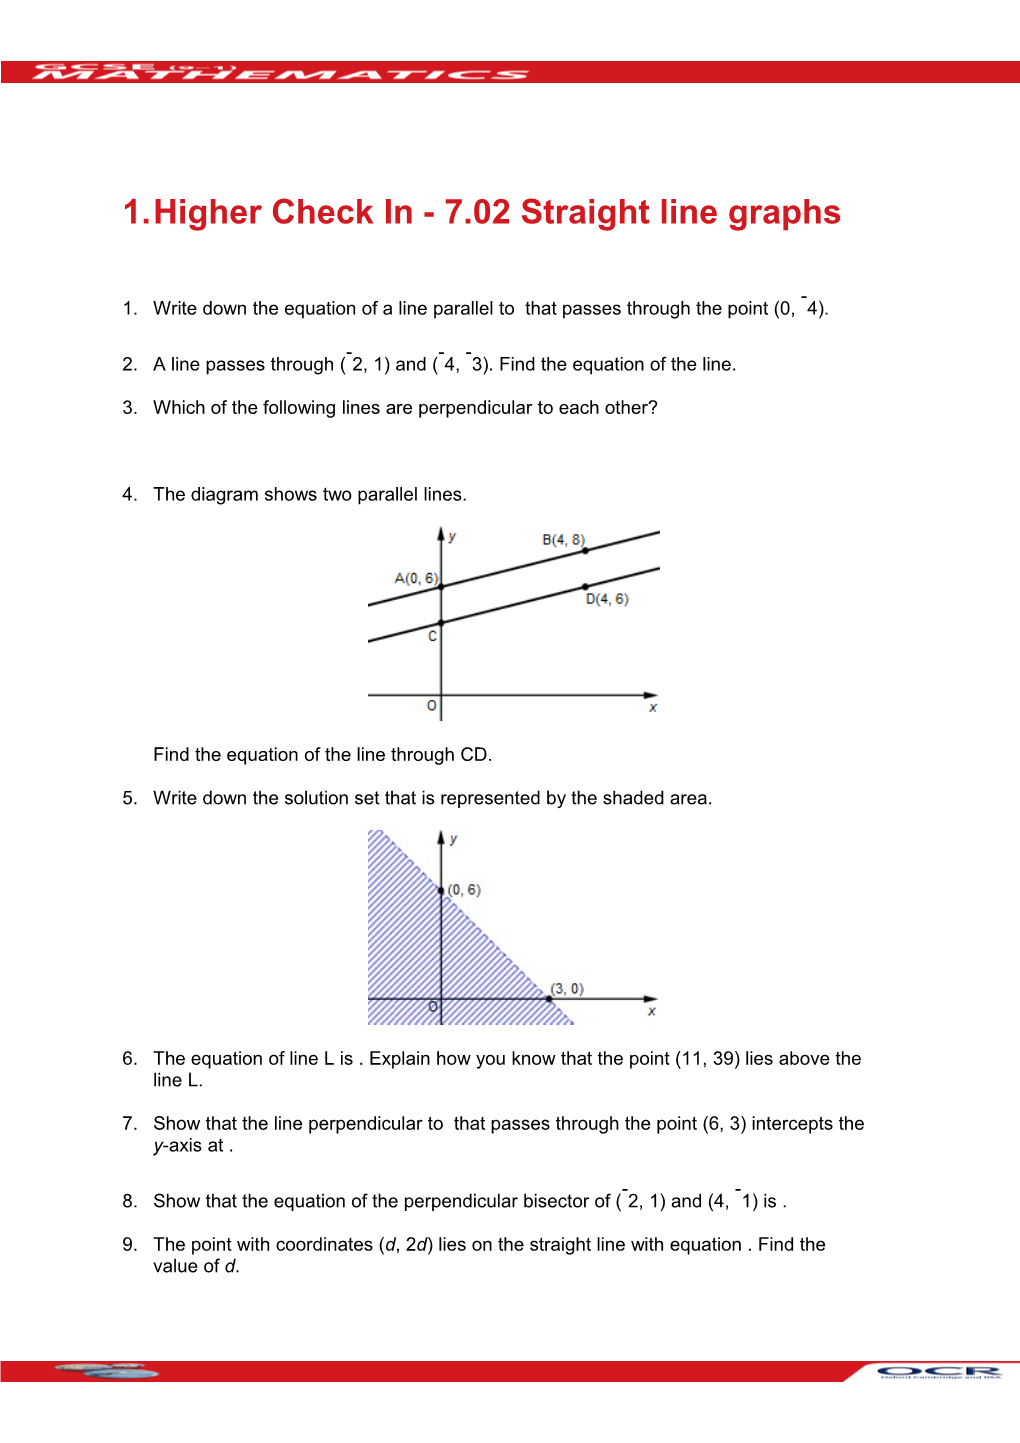 GCSE (9-1) Mathematics Higher Check in 7.02 Straight Line Graphs